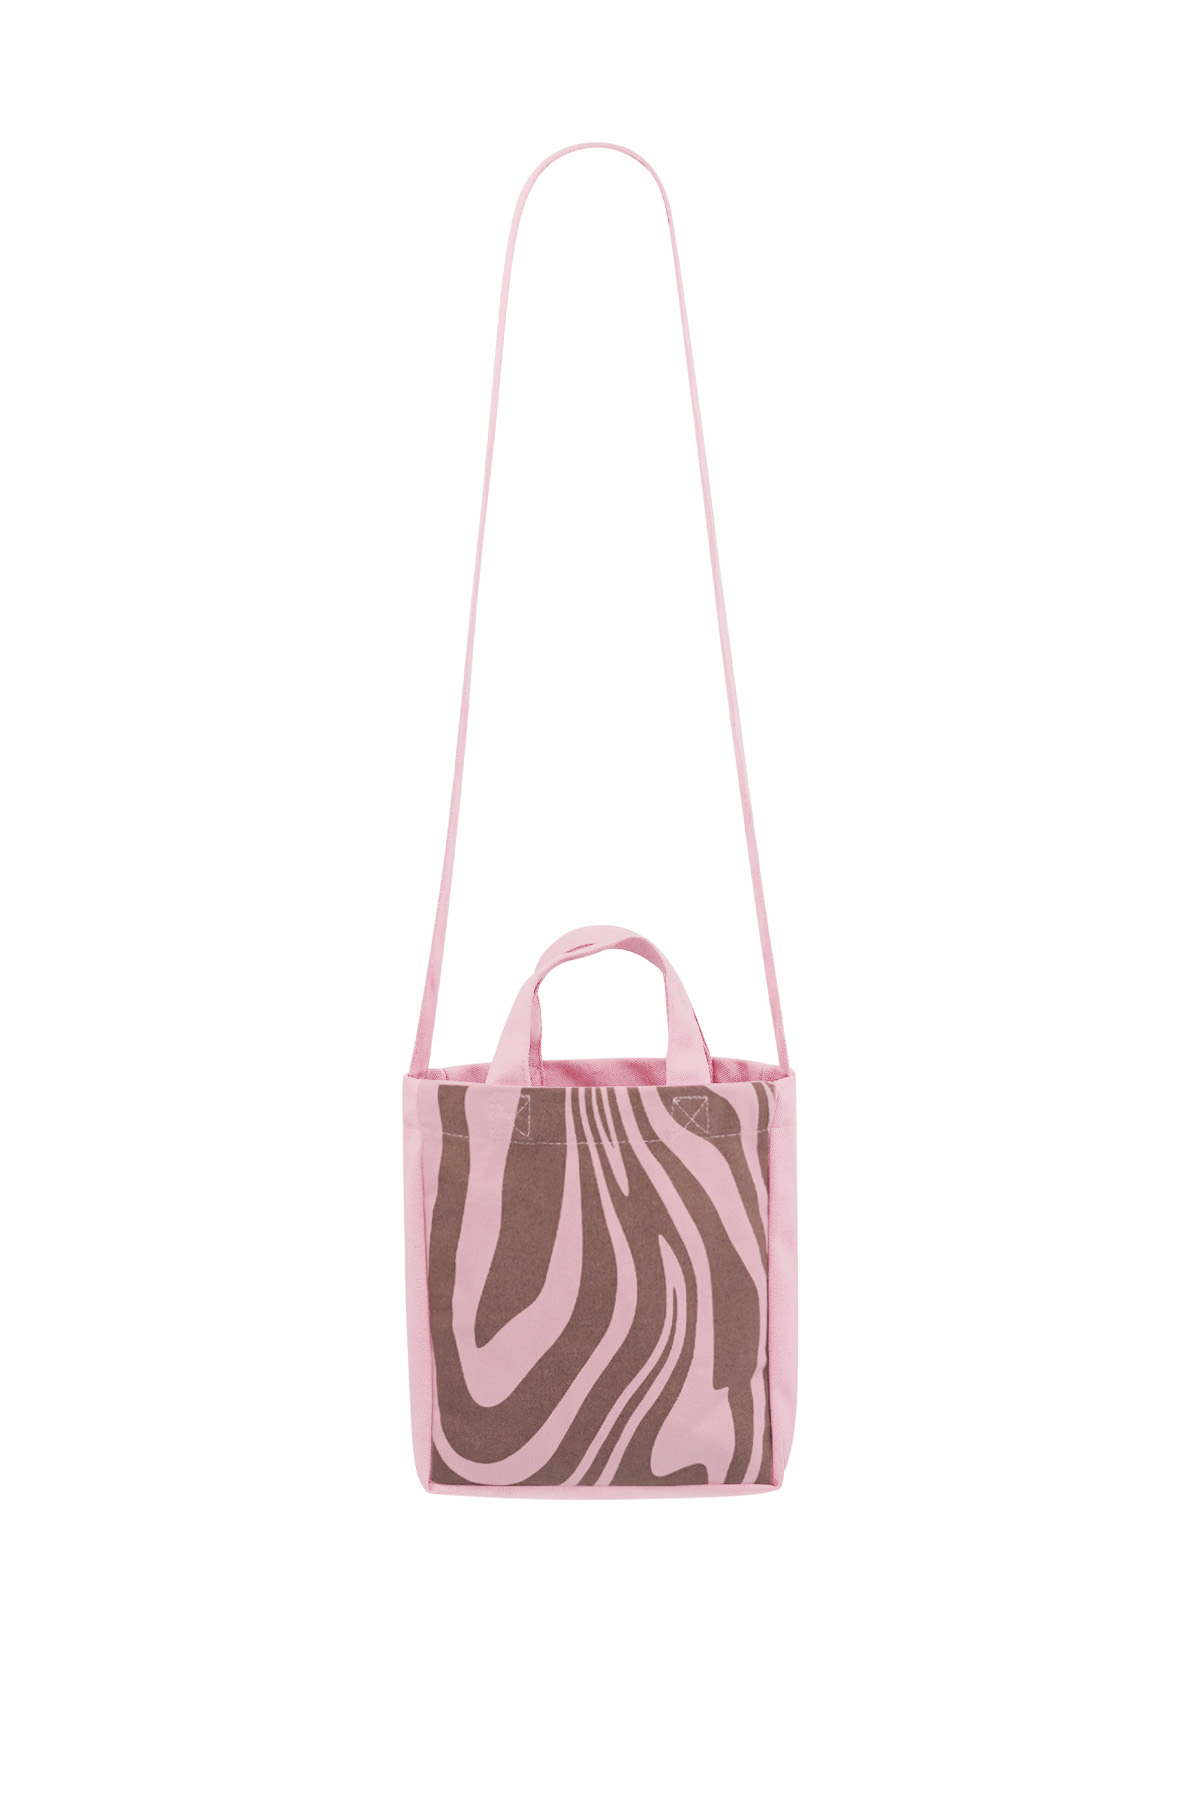 Küçük kanvas çanta zebra - pembe kahverengi h5 Resim4